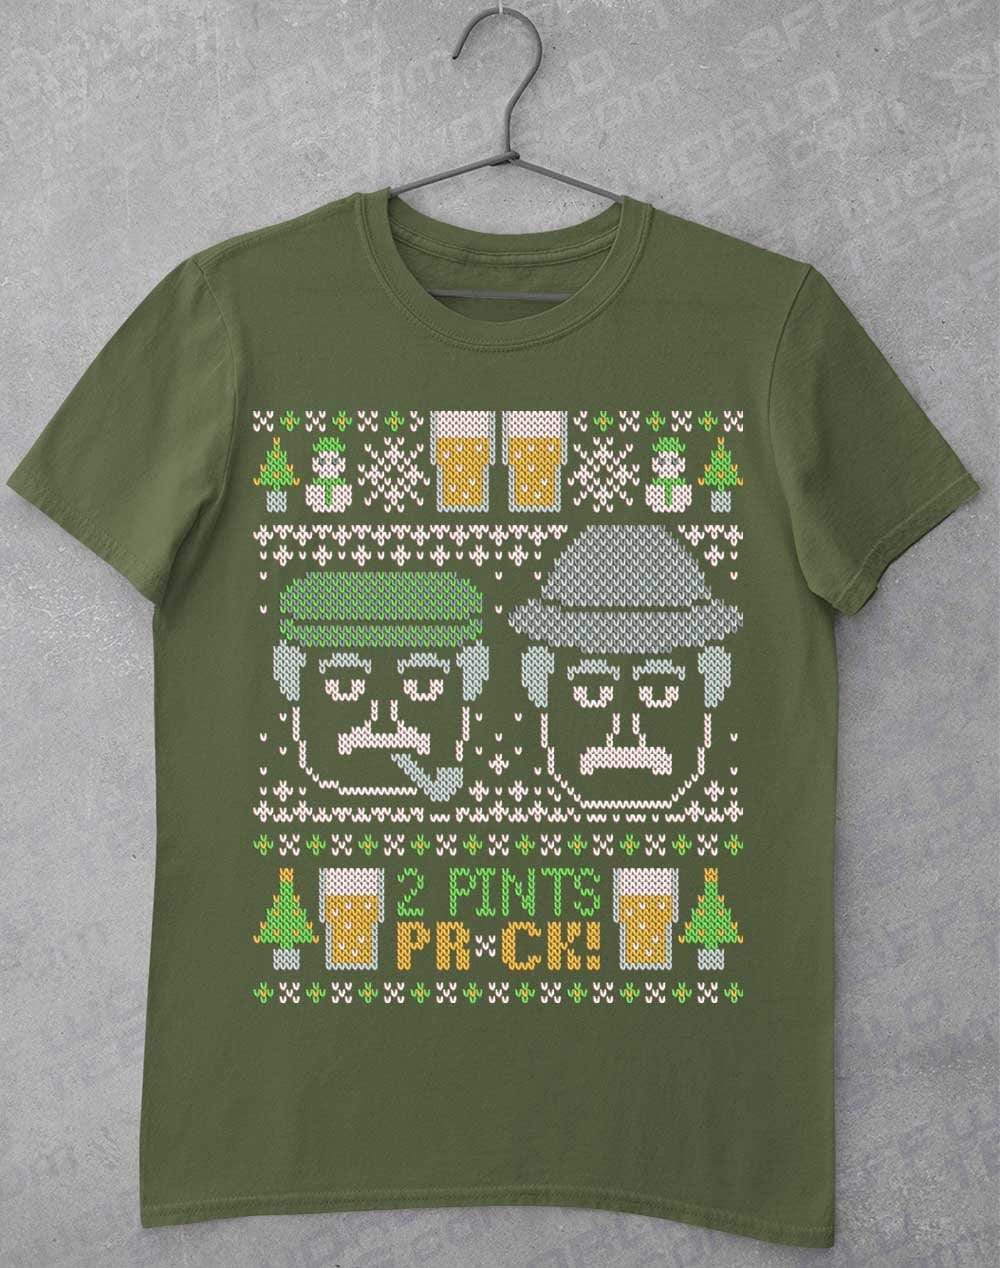 Craiglang Christmas 2 Pints Knit Pattern T-Shirt S / Military Green  - Off World Tees